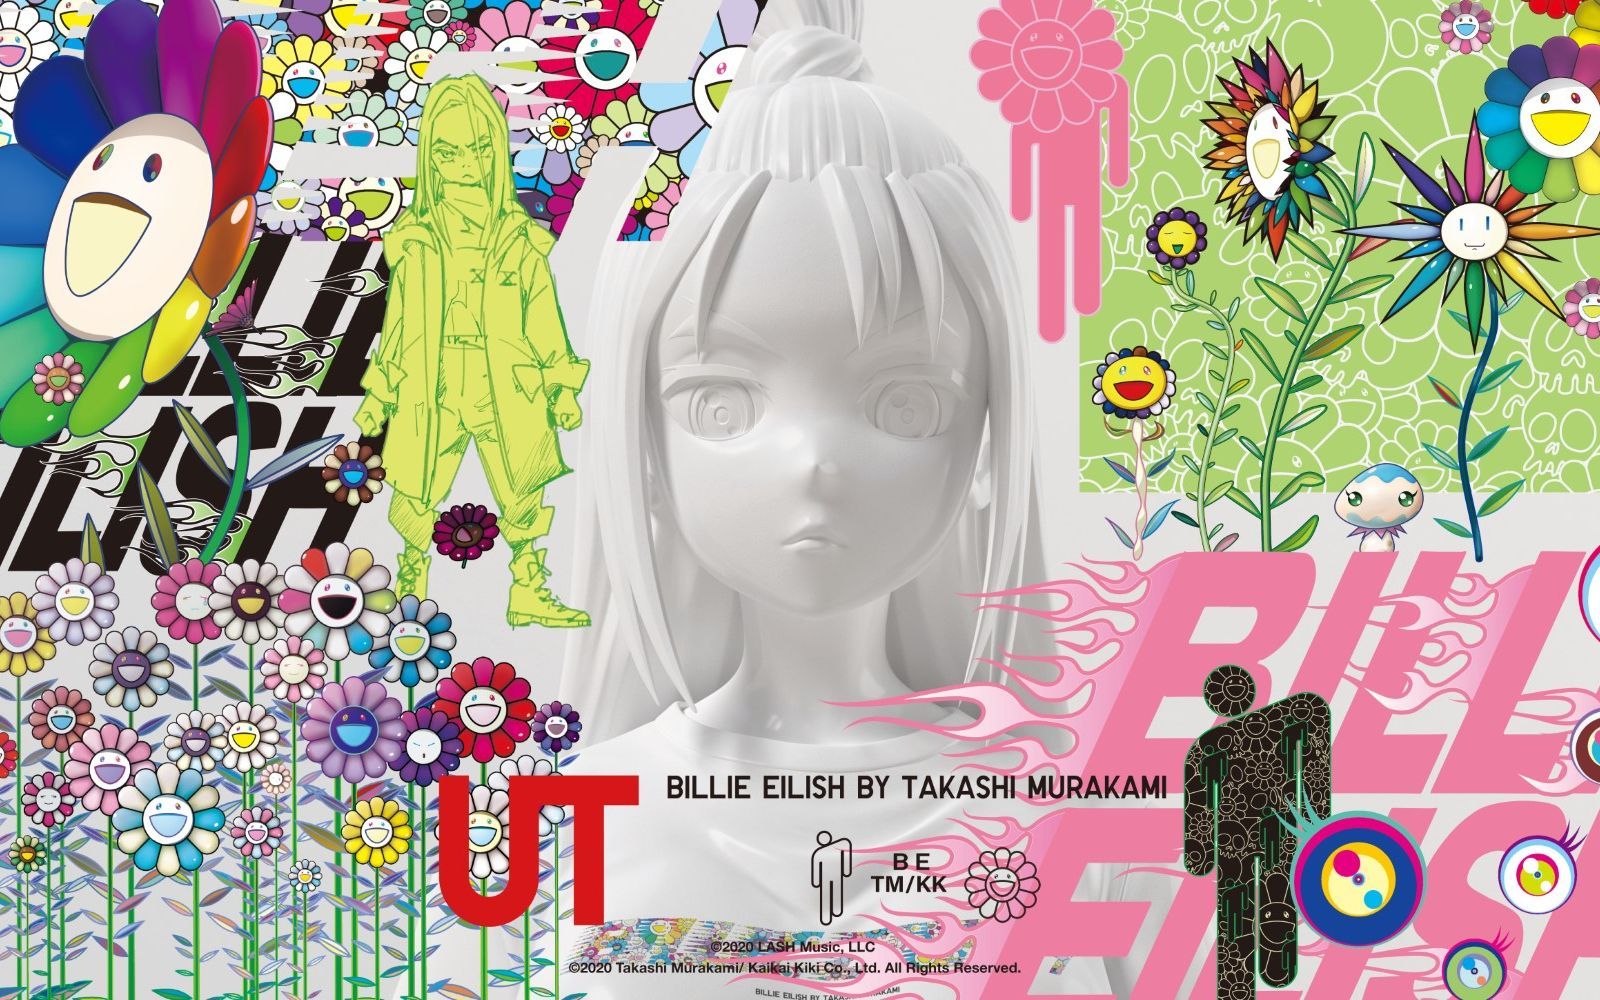 Takashi Murakami And Billie Eilish Link Once Again For Uniqlo Capsule